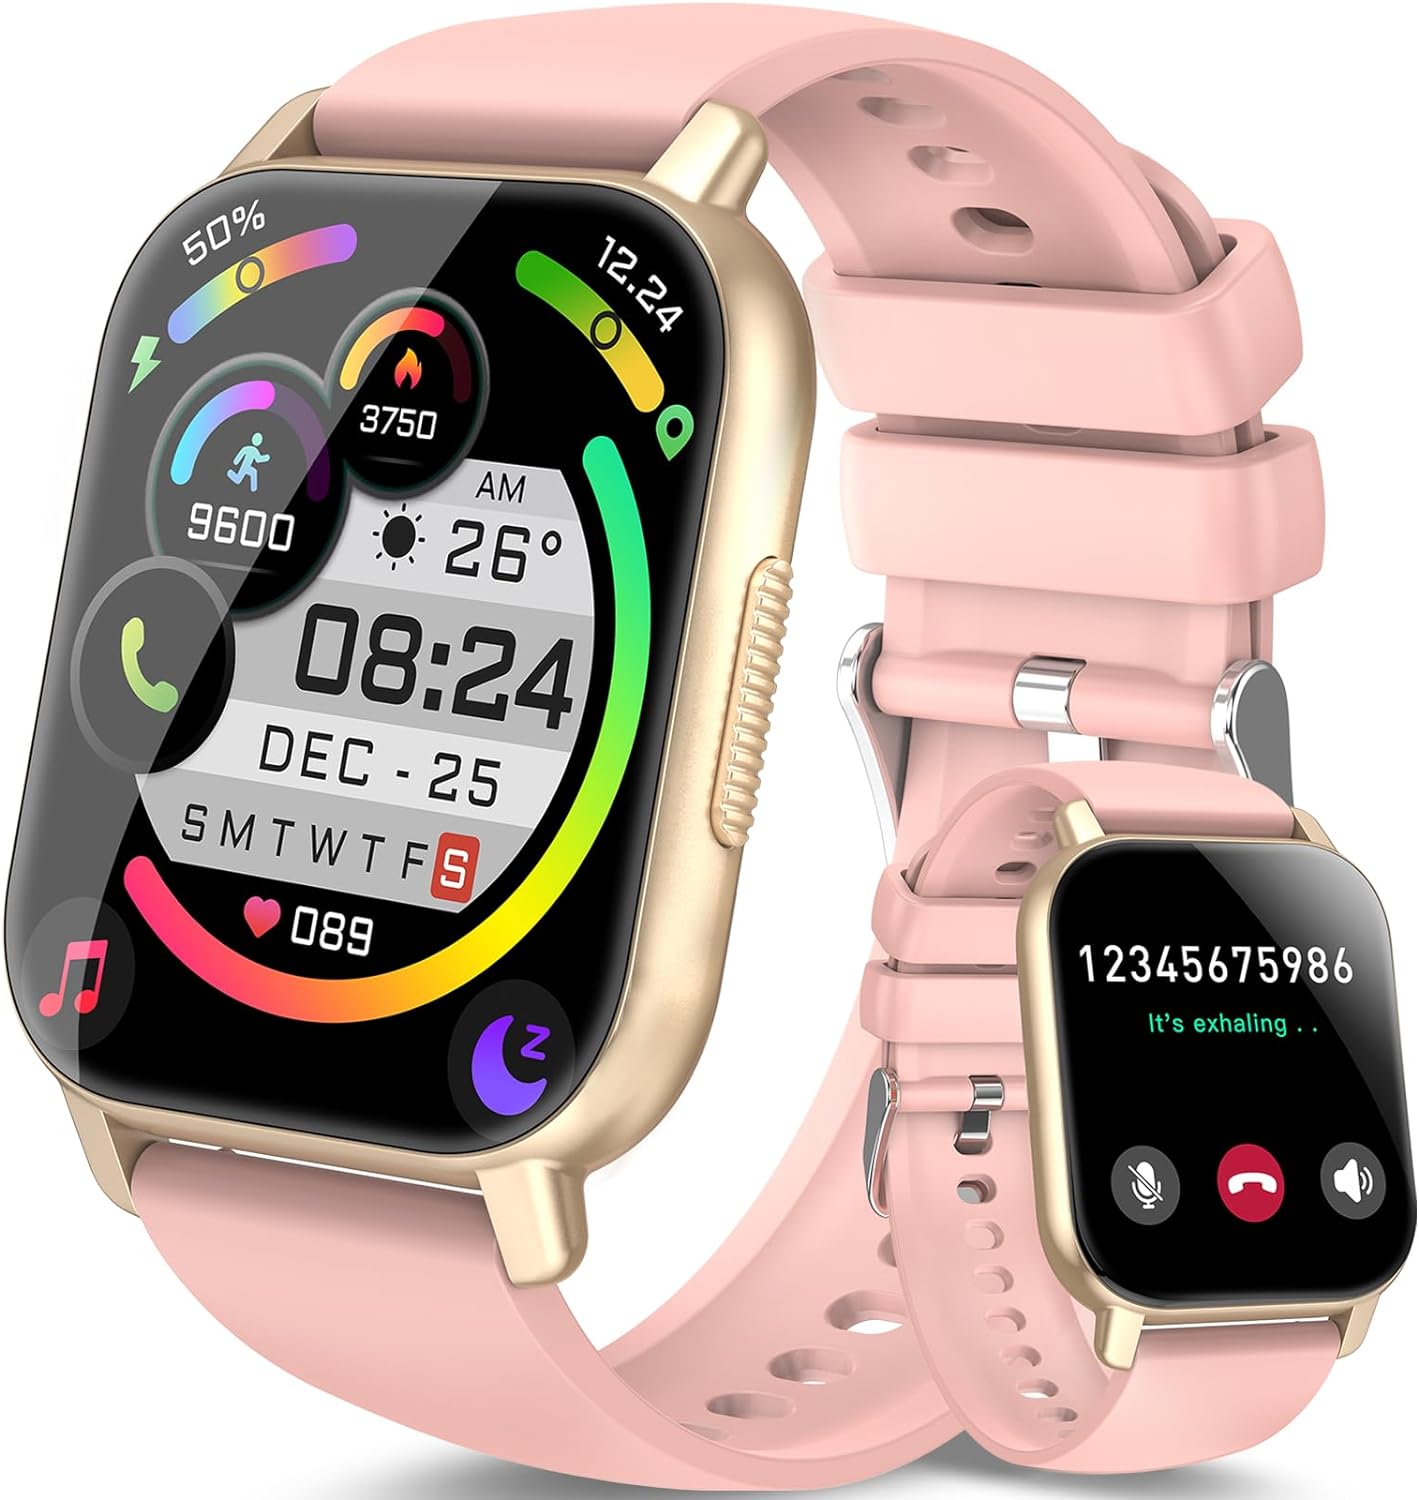 Smartwatch for Men and Women, 1.85 Inch Touchscreen Smart Watch with Calls, IP68 Waterproof Fitness Watch, Black